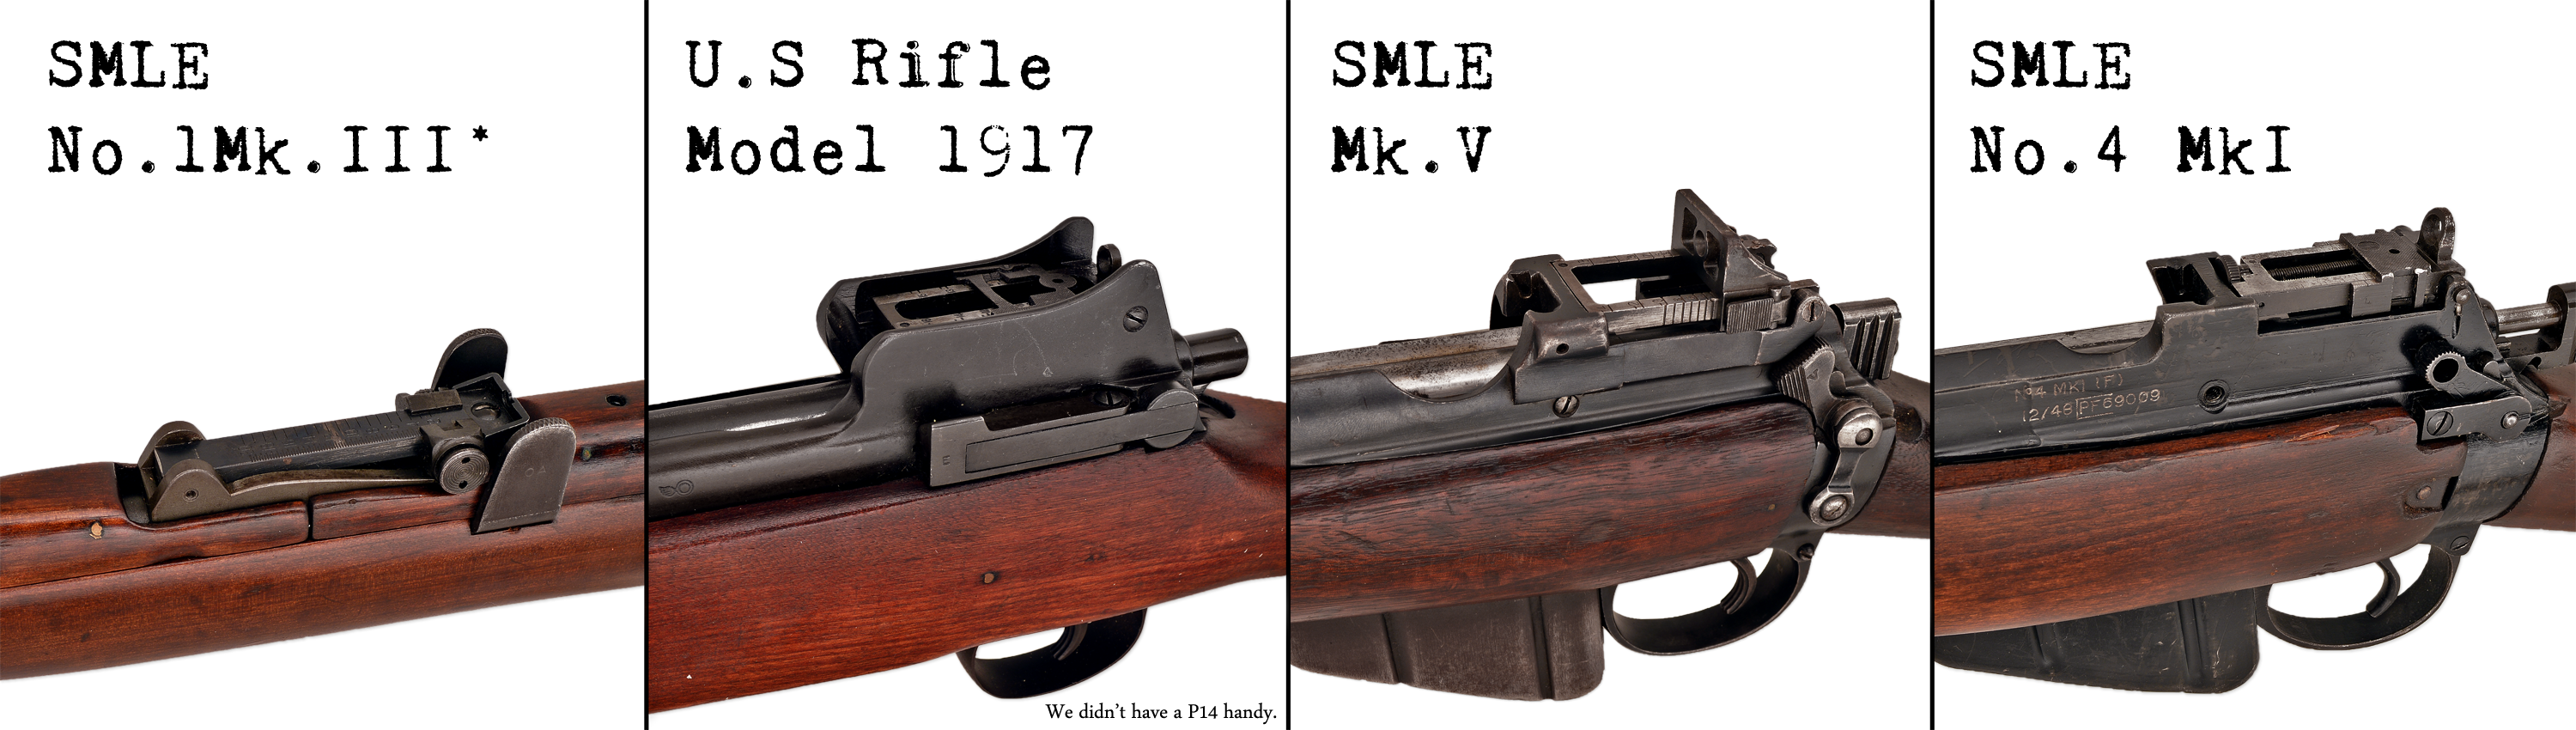 Lee Enfield Mk Iii Rifle #22